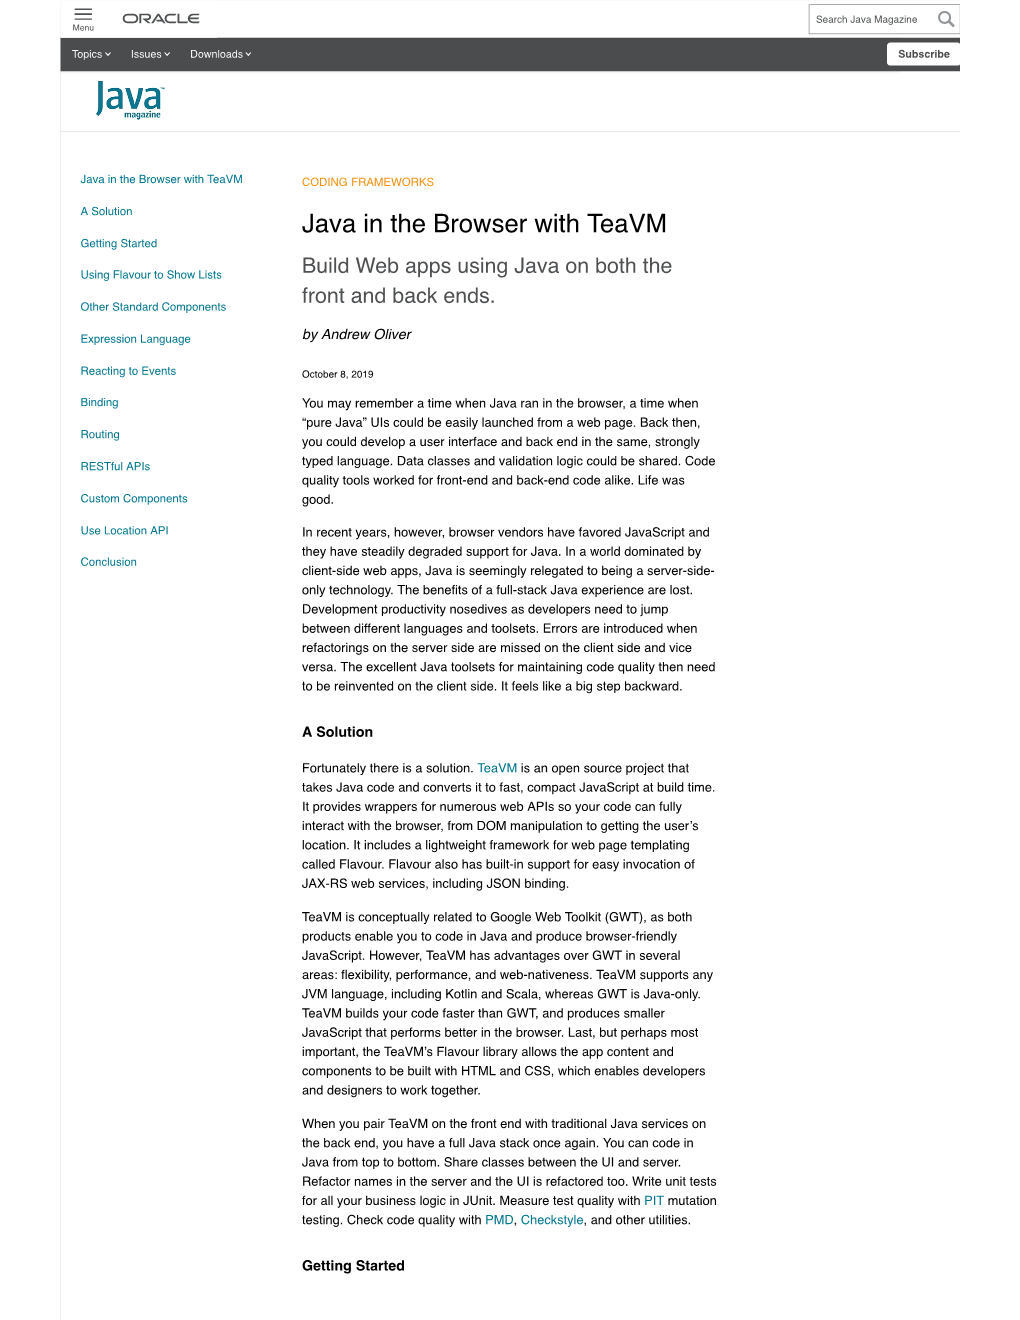 Java in the Browser with Teavm CODING FRAMEWORKS